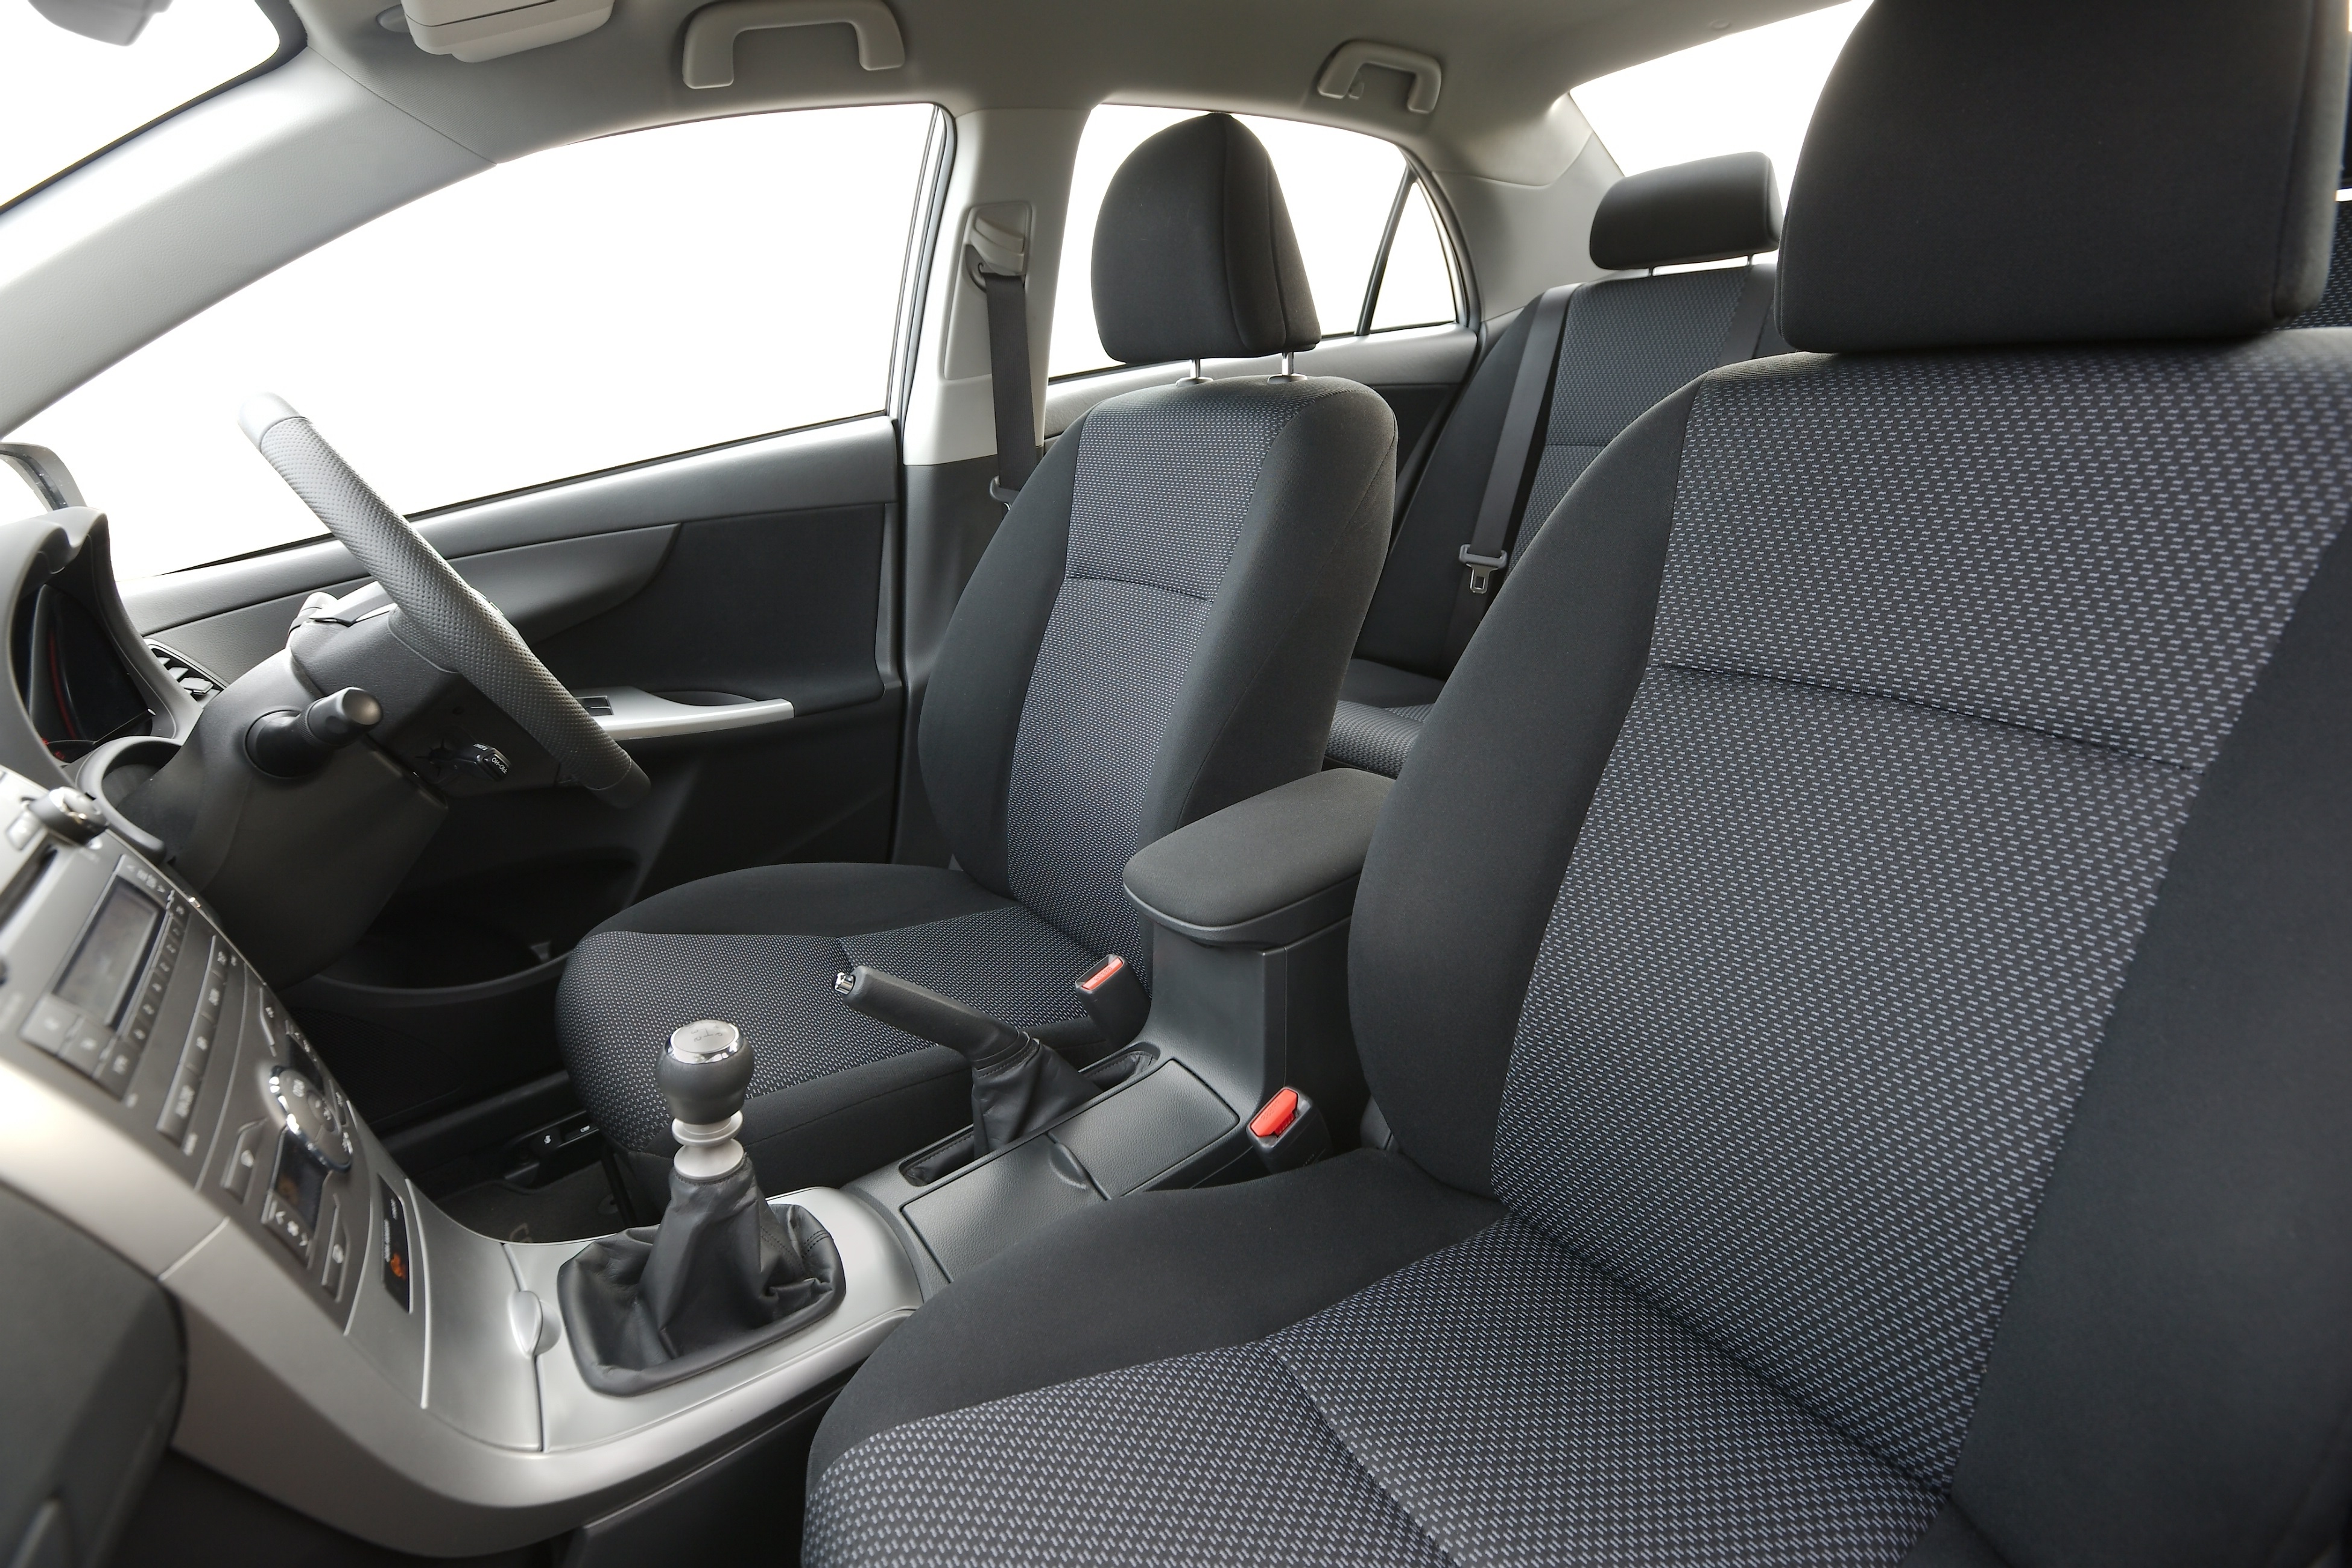 New SEAT black car interior 